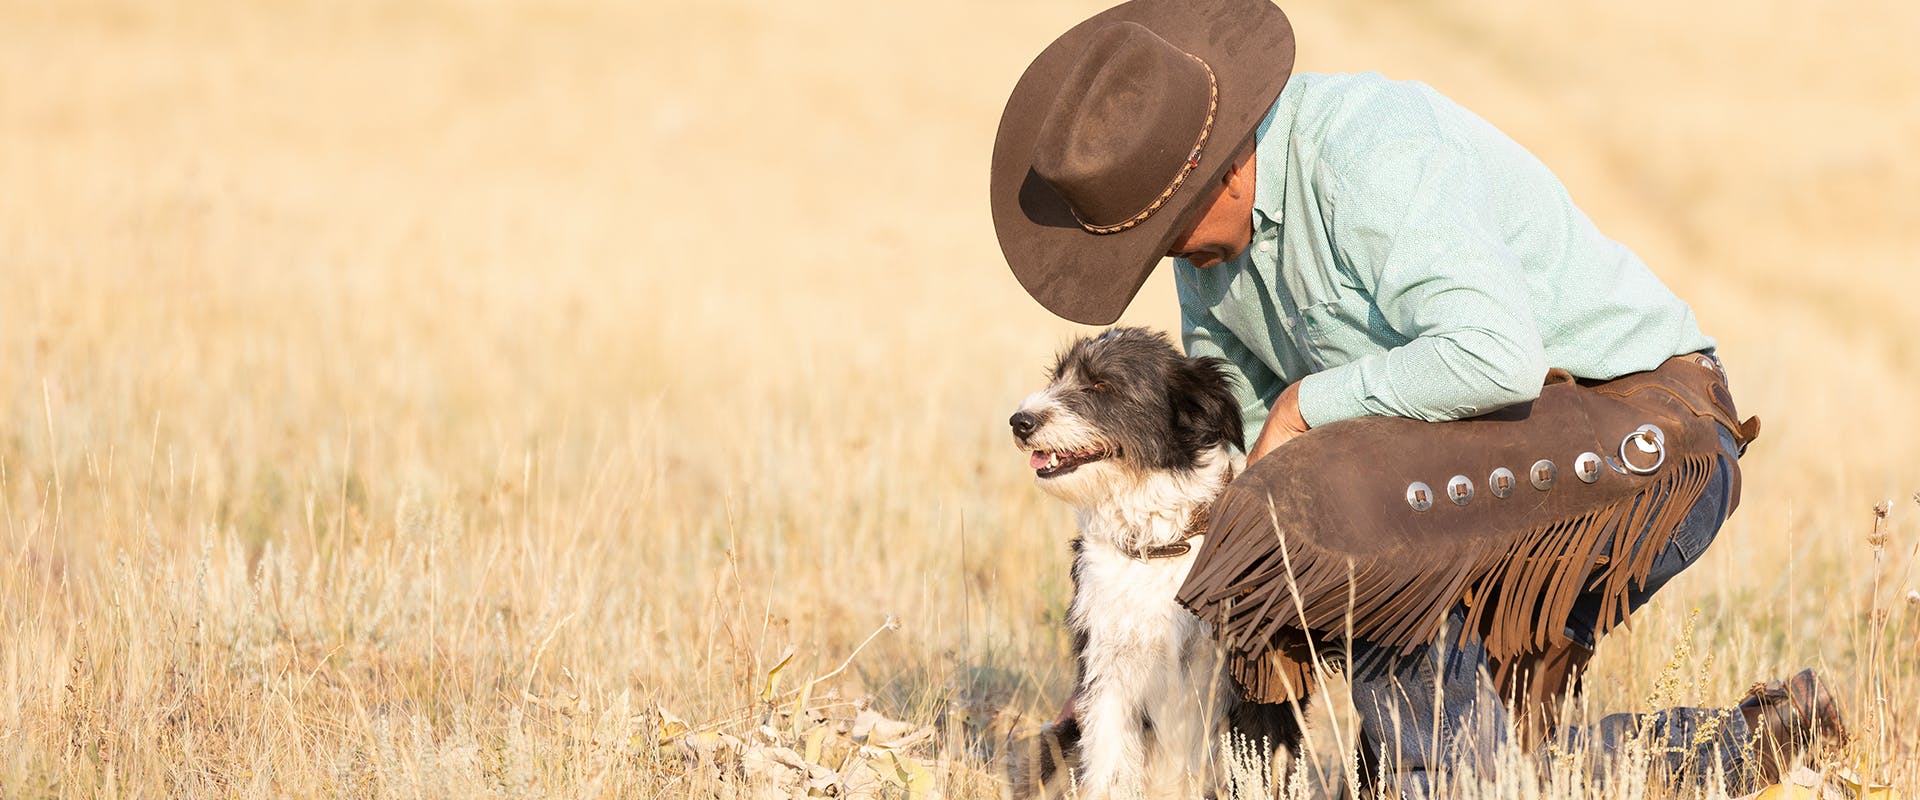 A cowboy and his dog